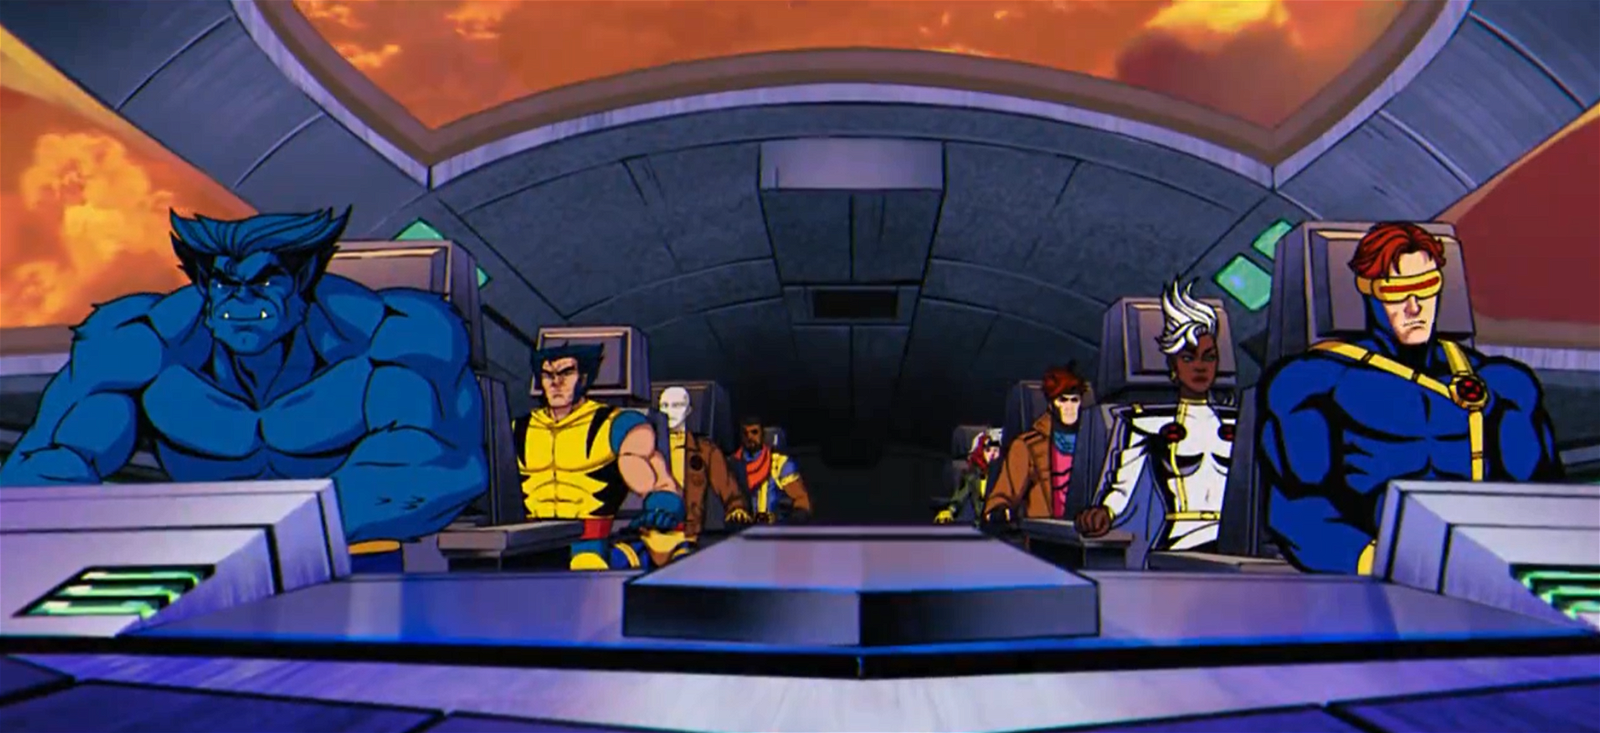 X-Men members inside their jet in this scene 